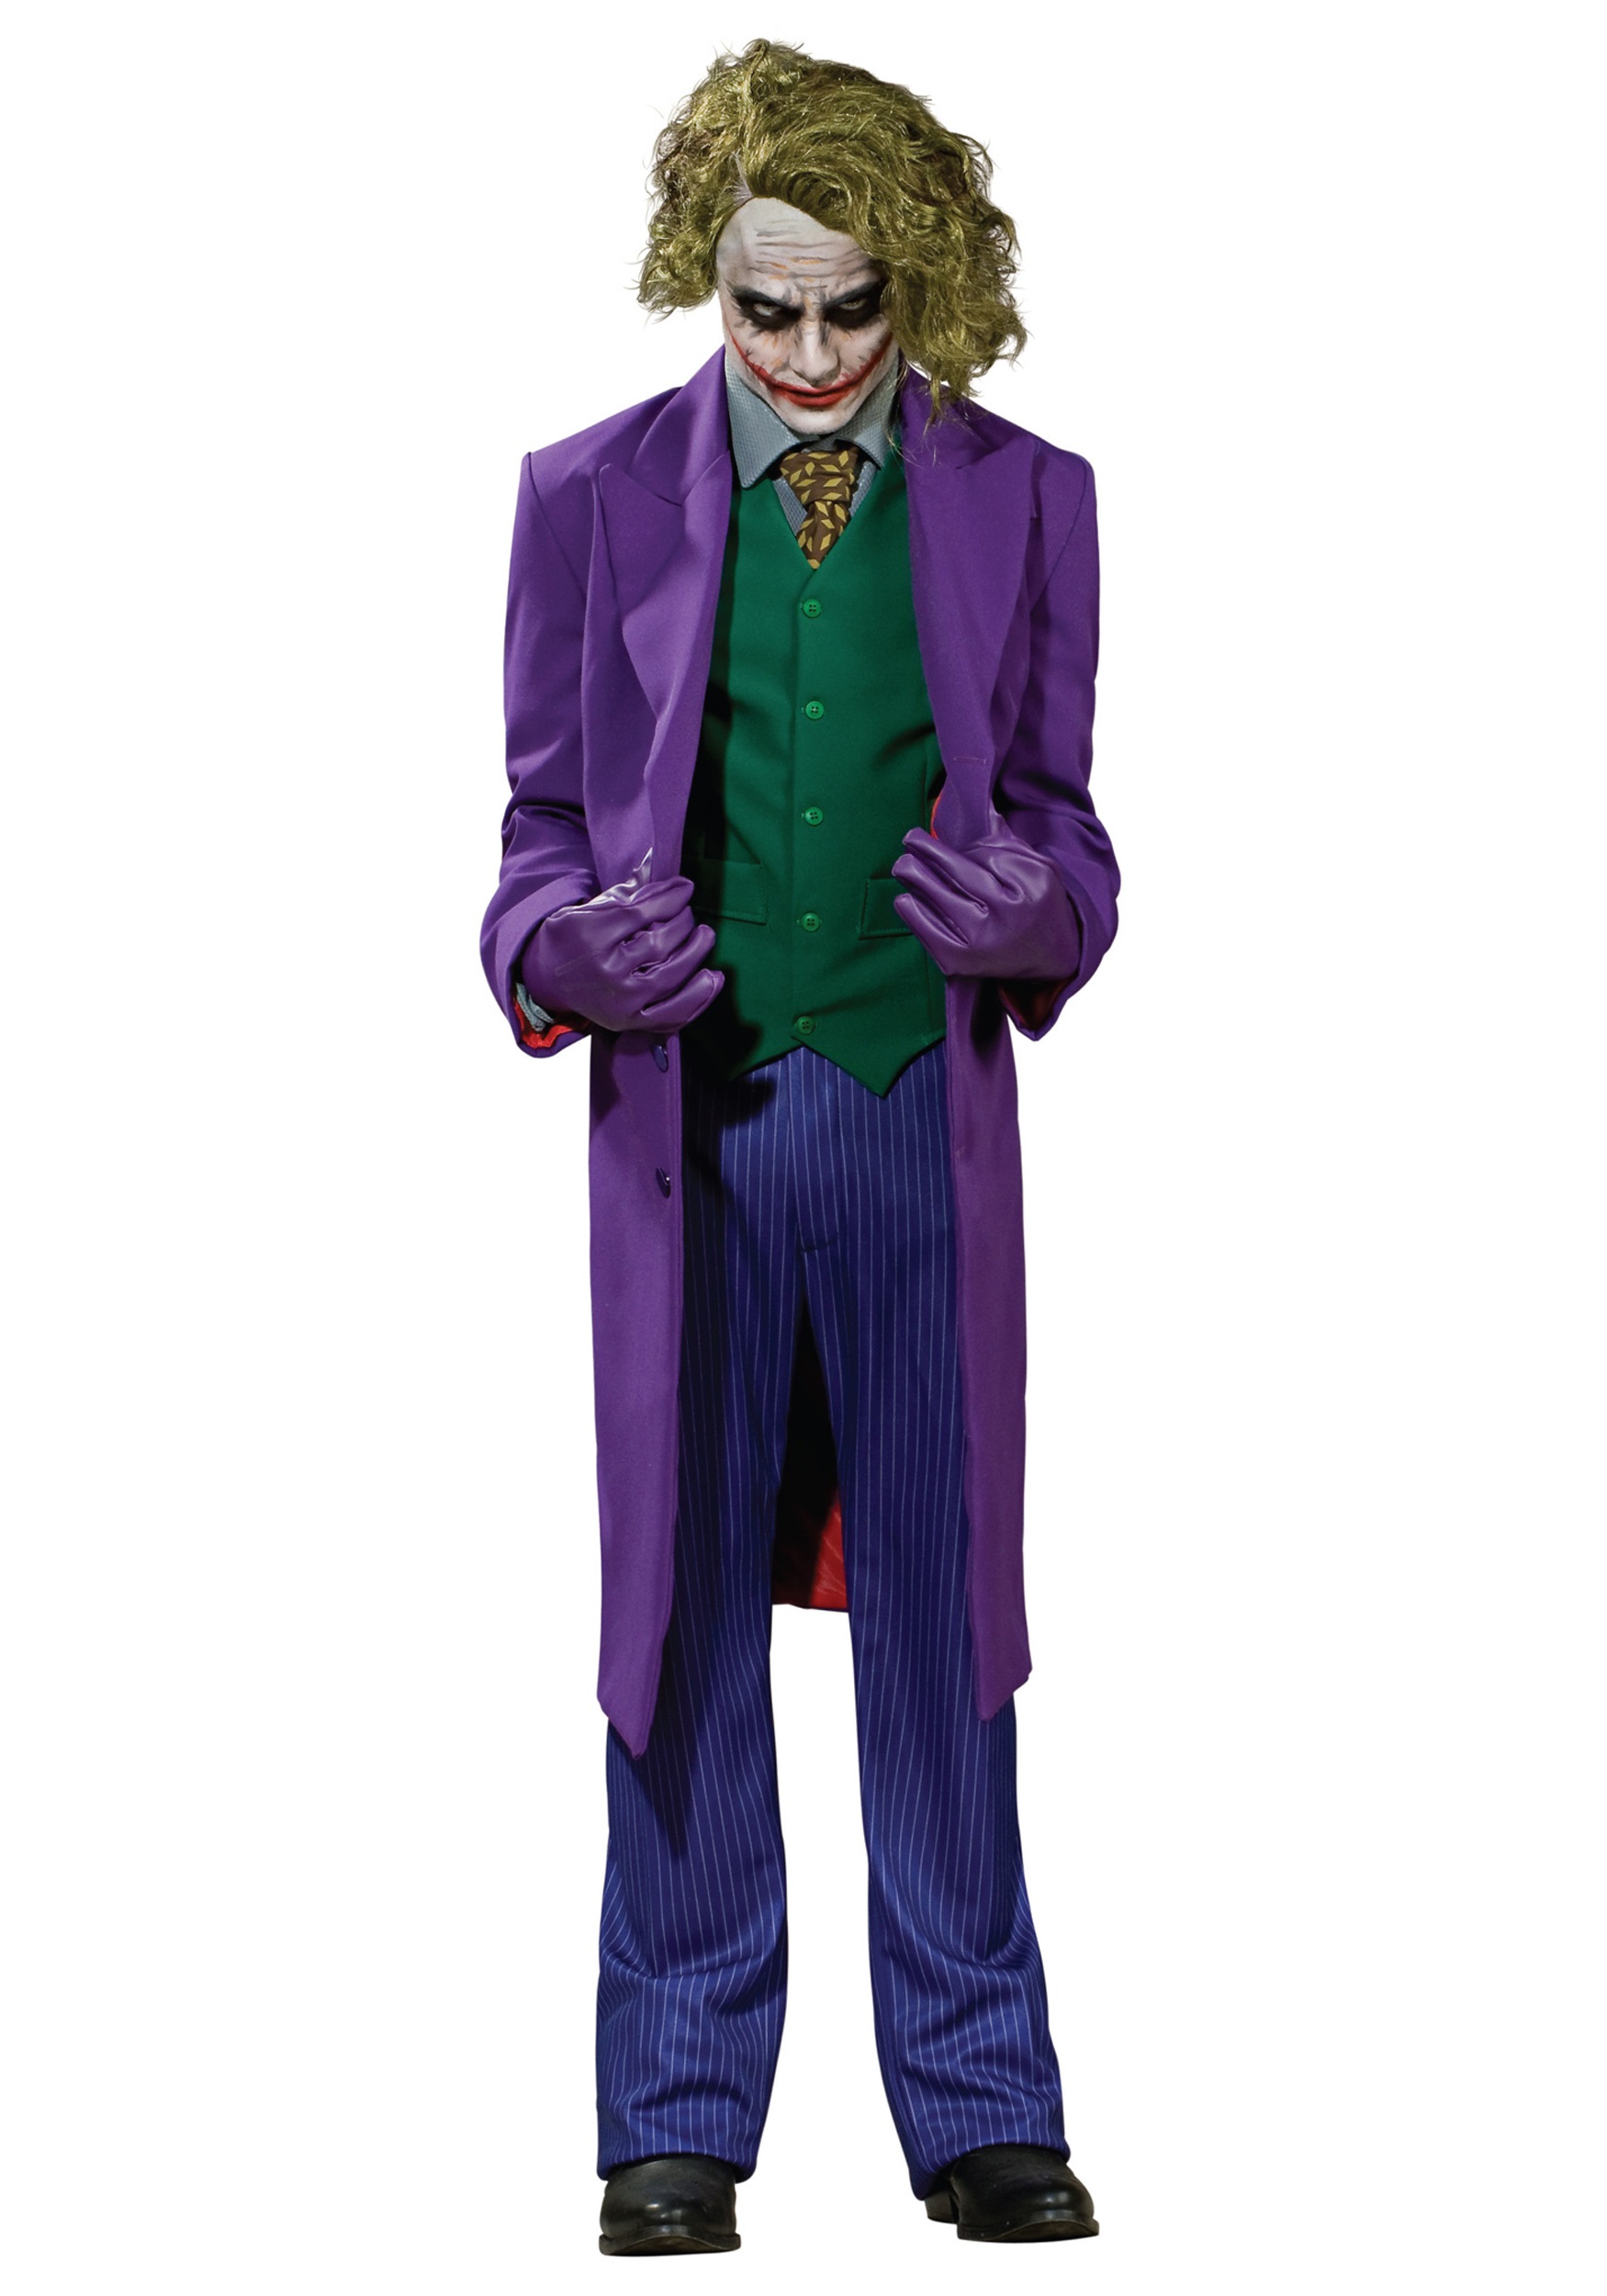 Grand Heritage Joker Costume - Halloween Costume Ideas 2019